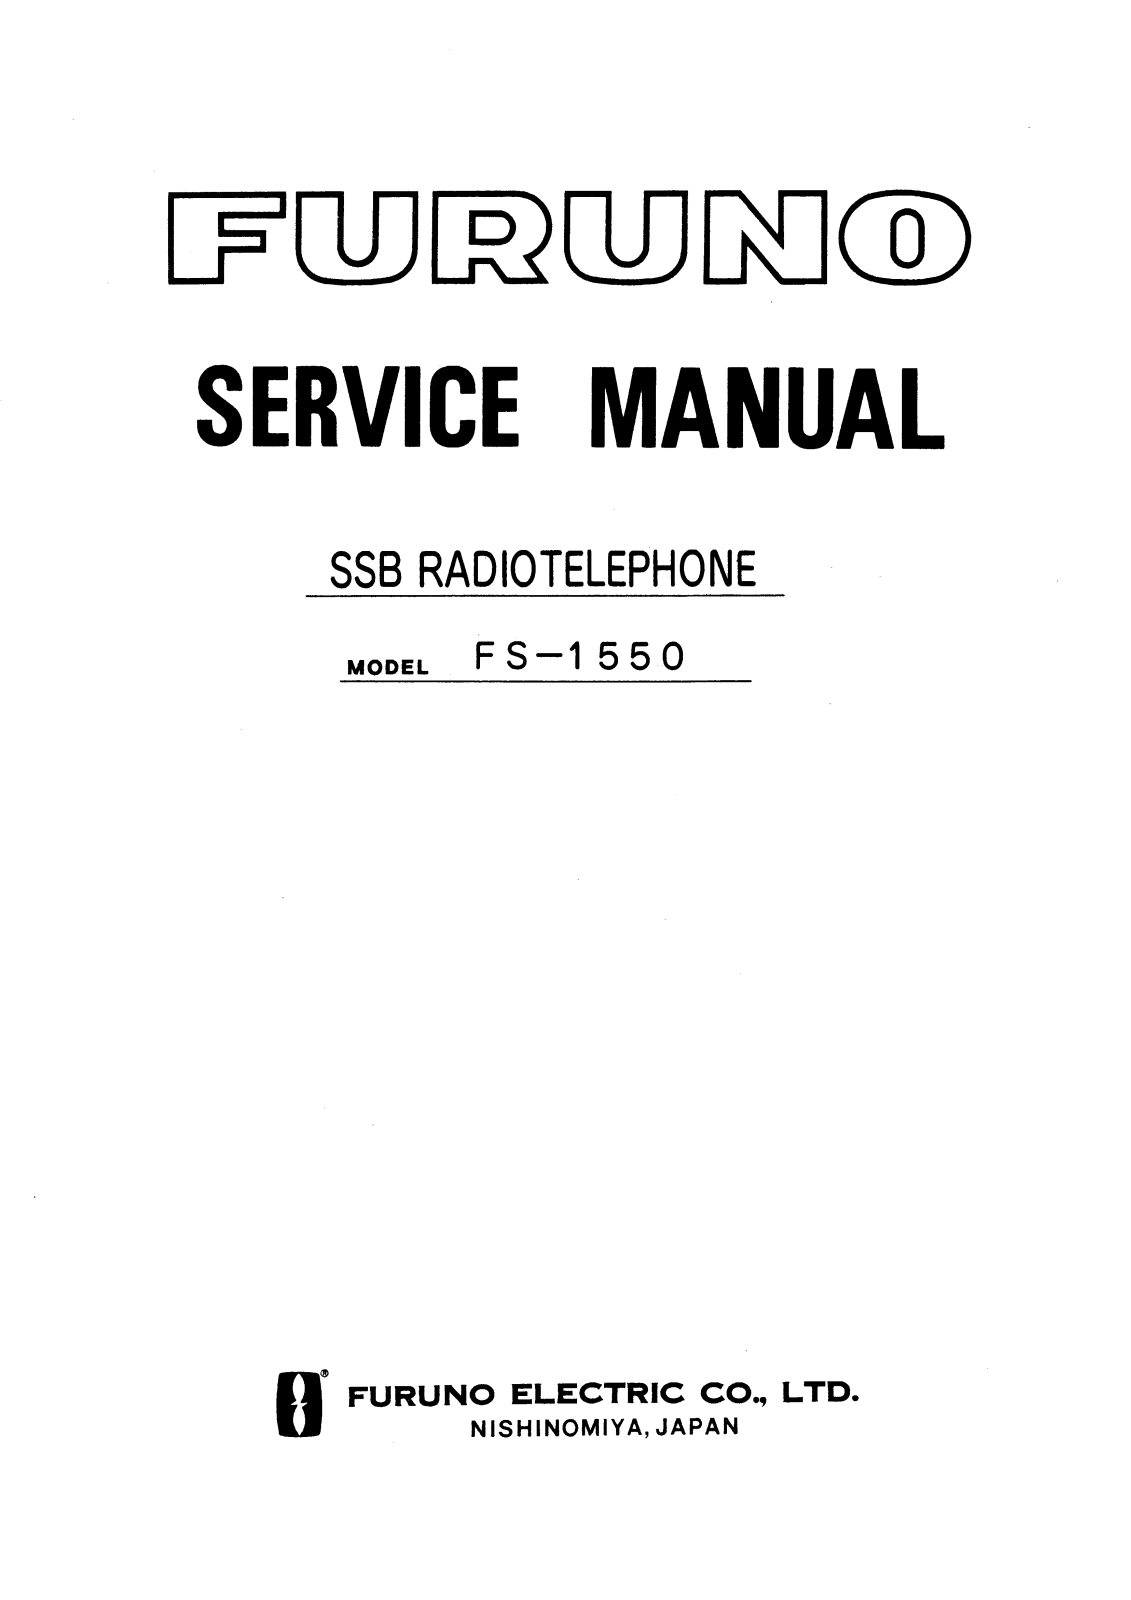 Furuno fs1550 User Manual